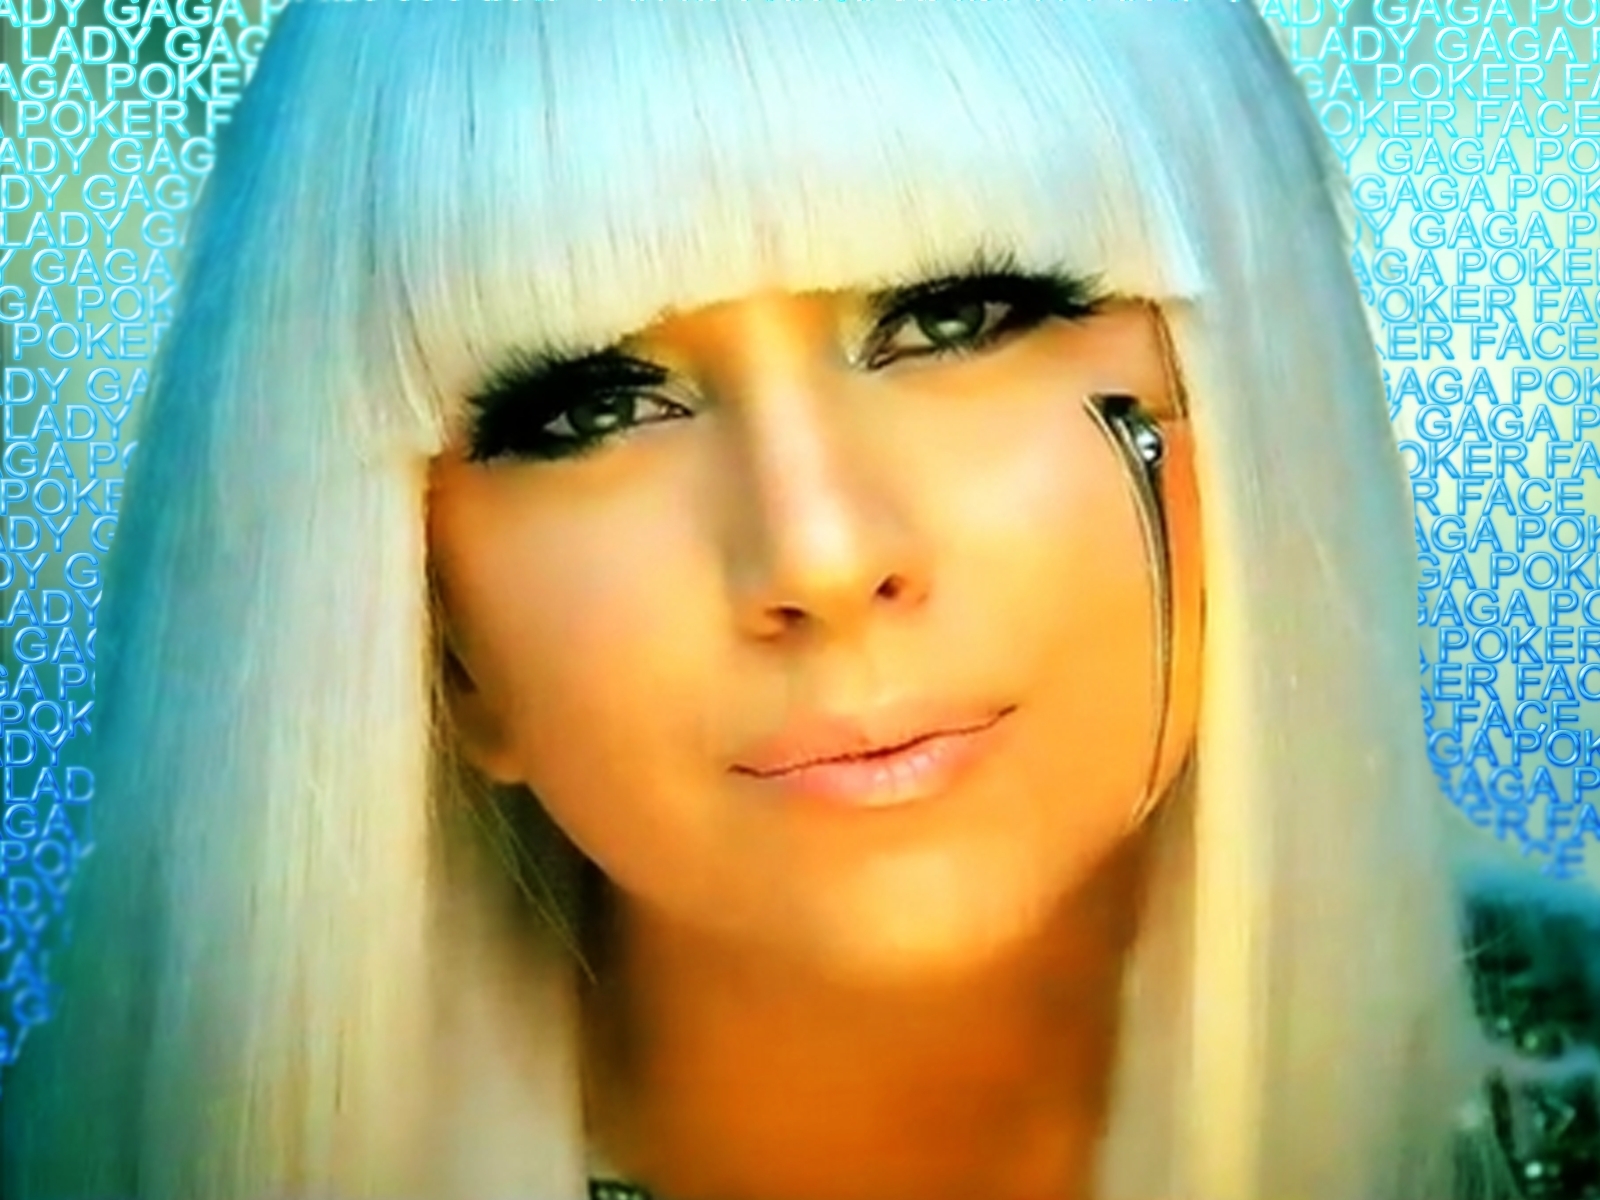 Lady Gaga's Iconic Orange and Blue Hair - wide 5